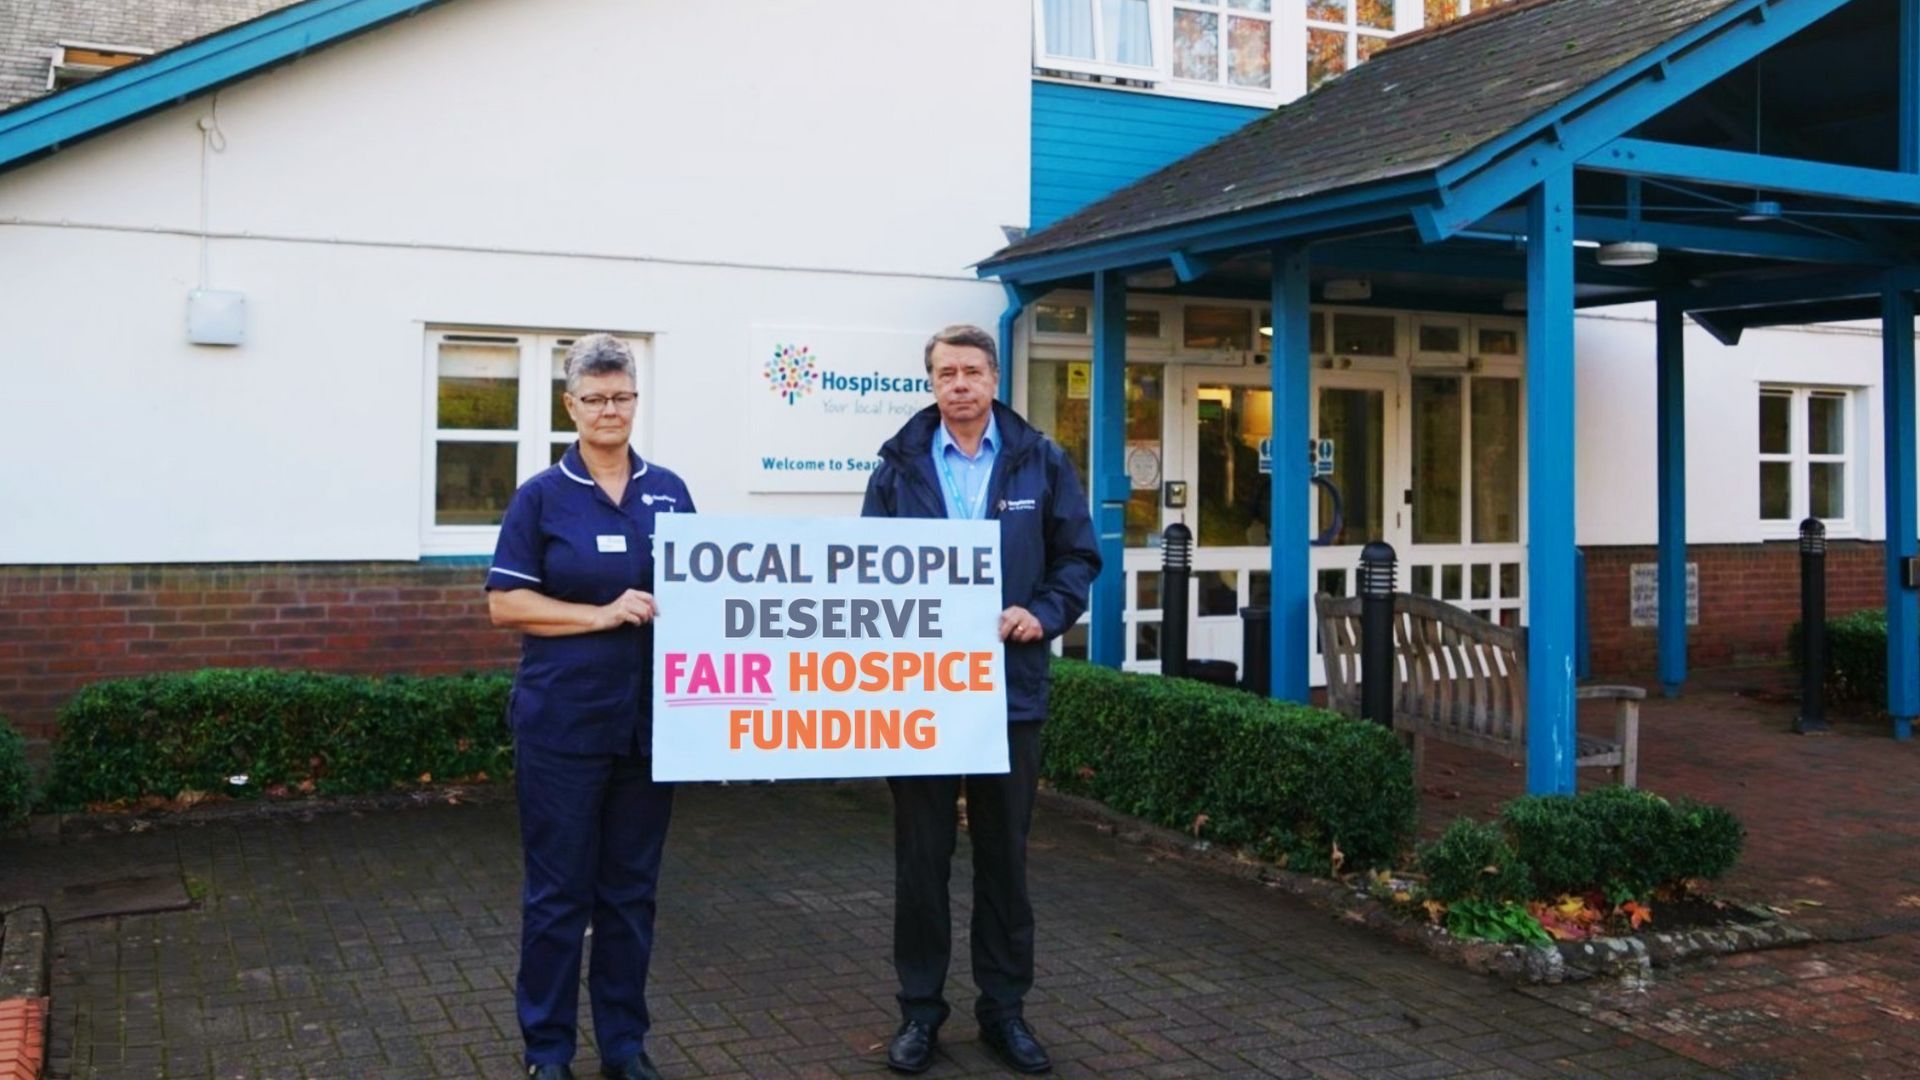 Local people deserve fair hospice funding